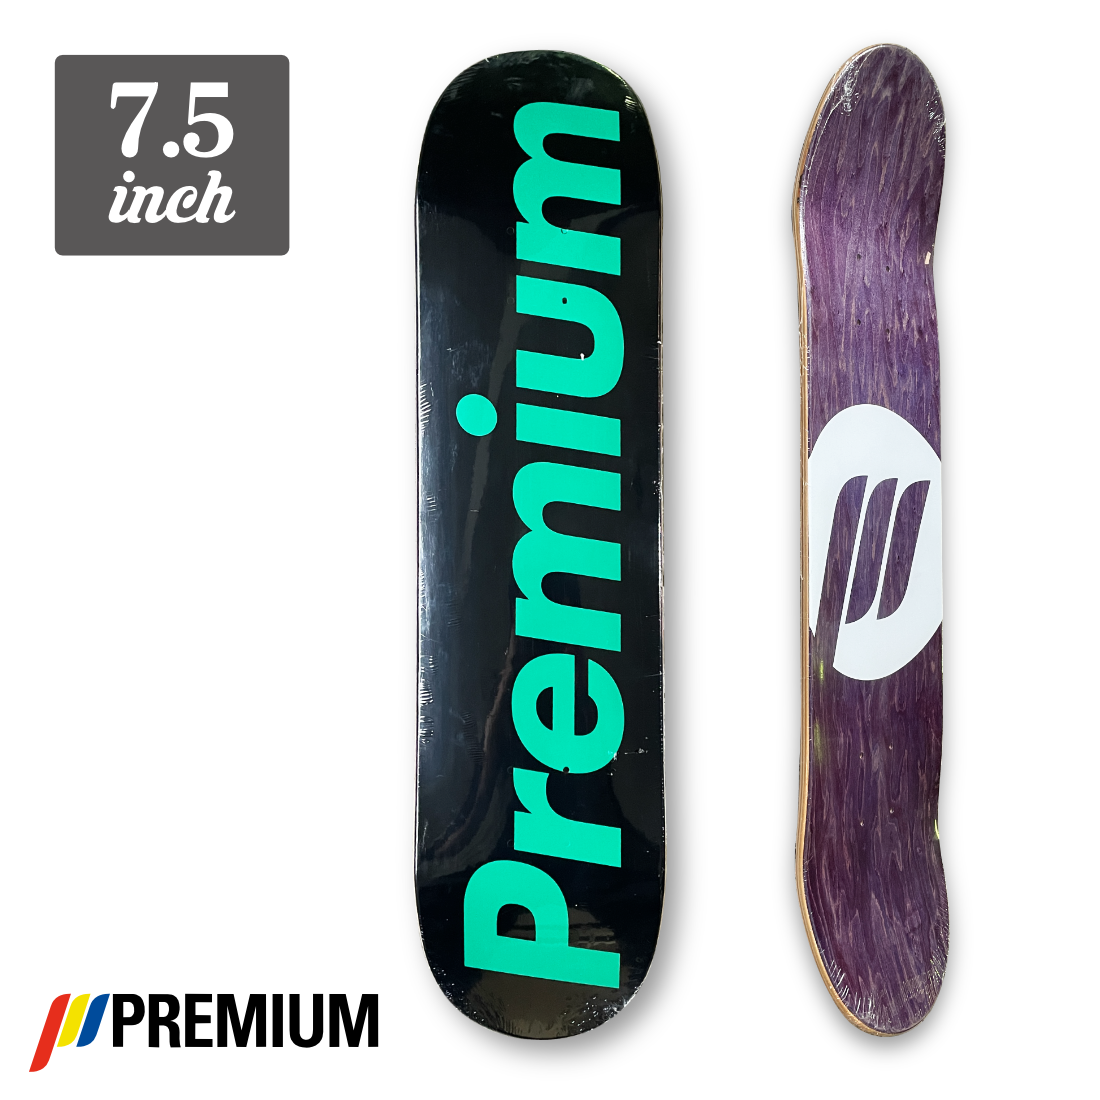 (子供用)【7.5】Premium Skateboards - Premium "Peppermint Green"